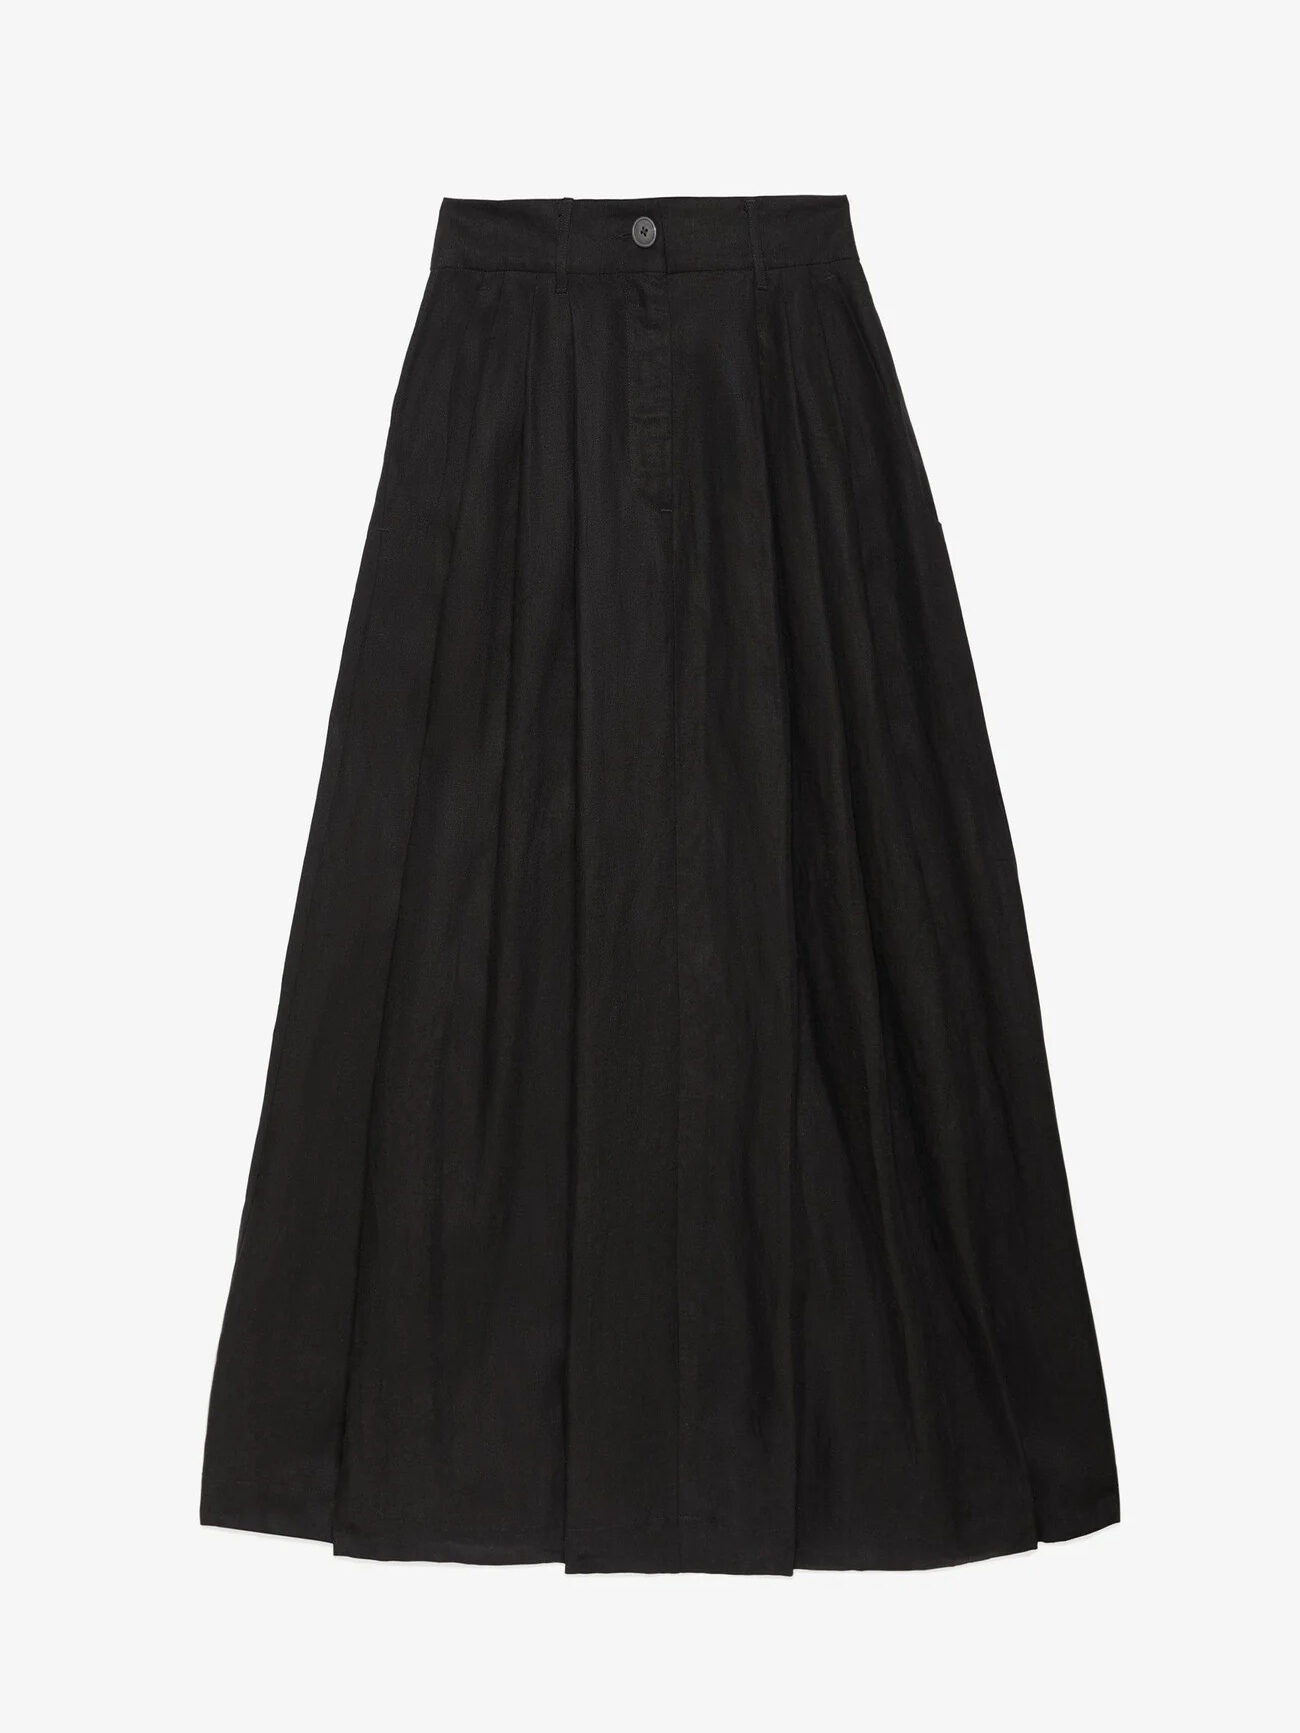 Black pleated midi skirt isolated on white background.